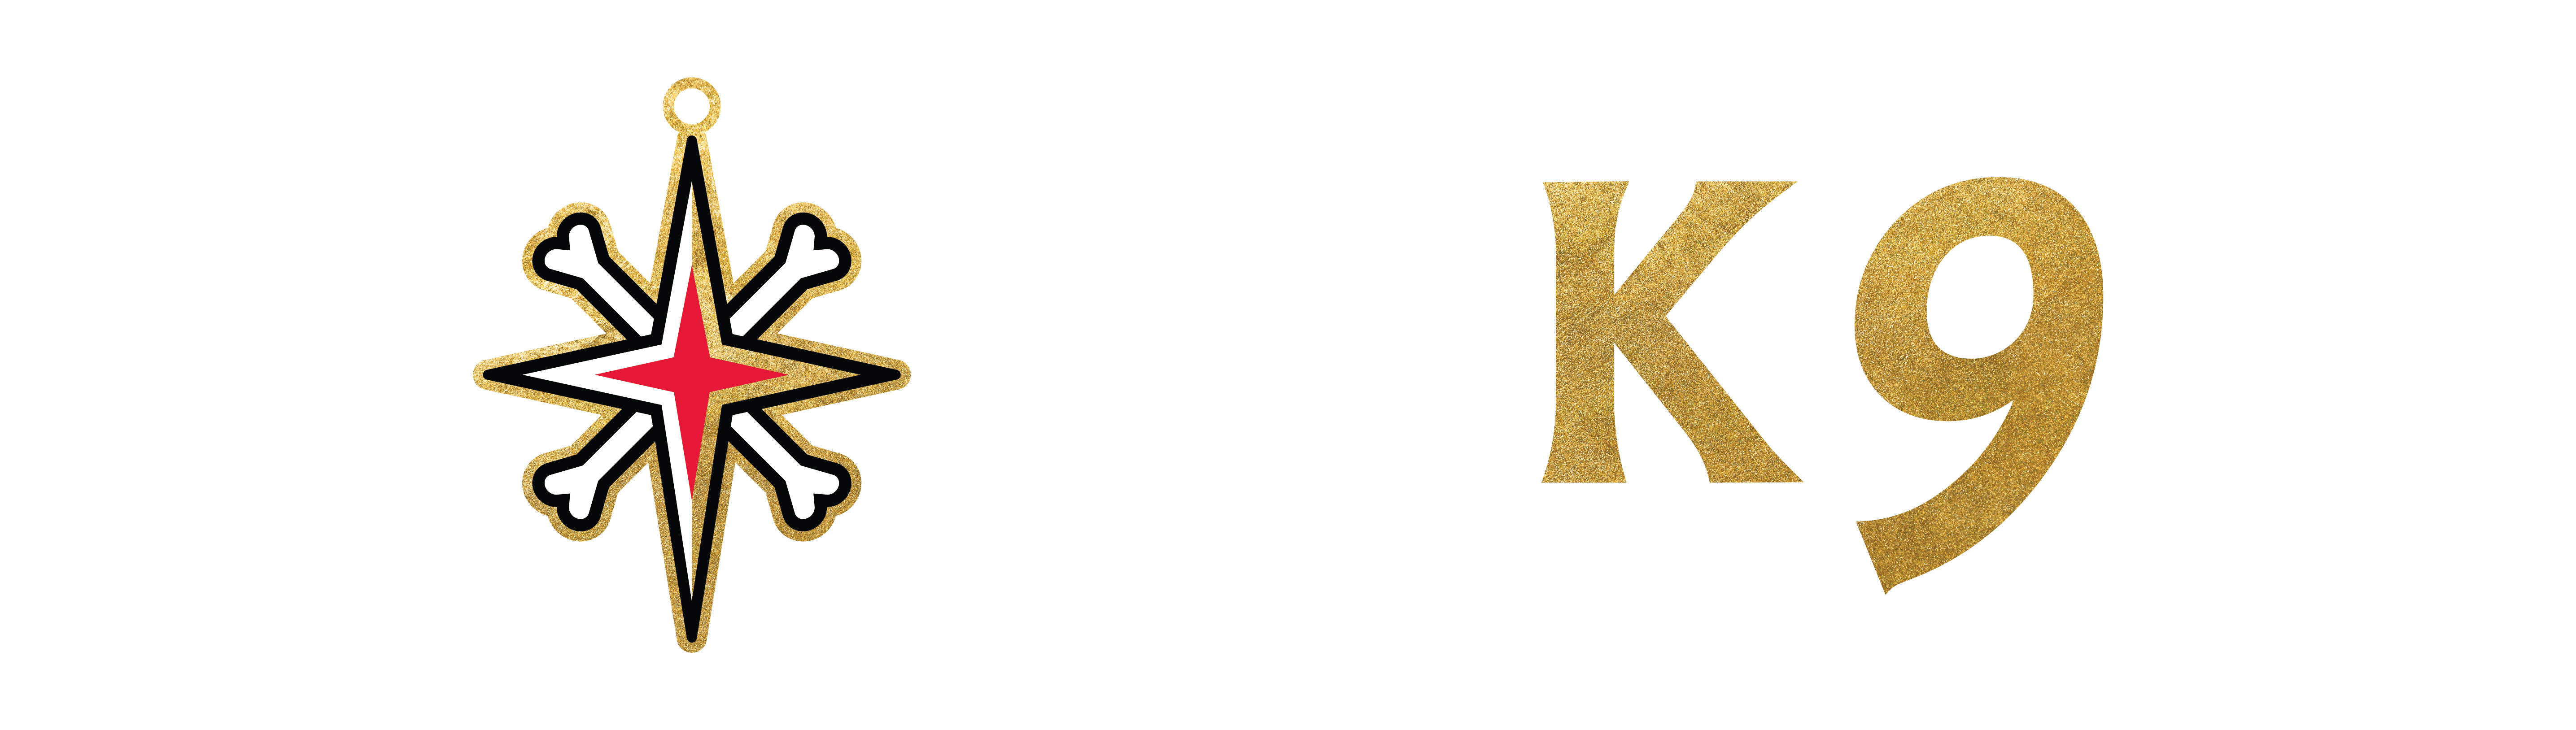 VGK-9 8@3x